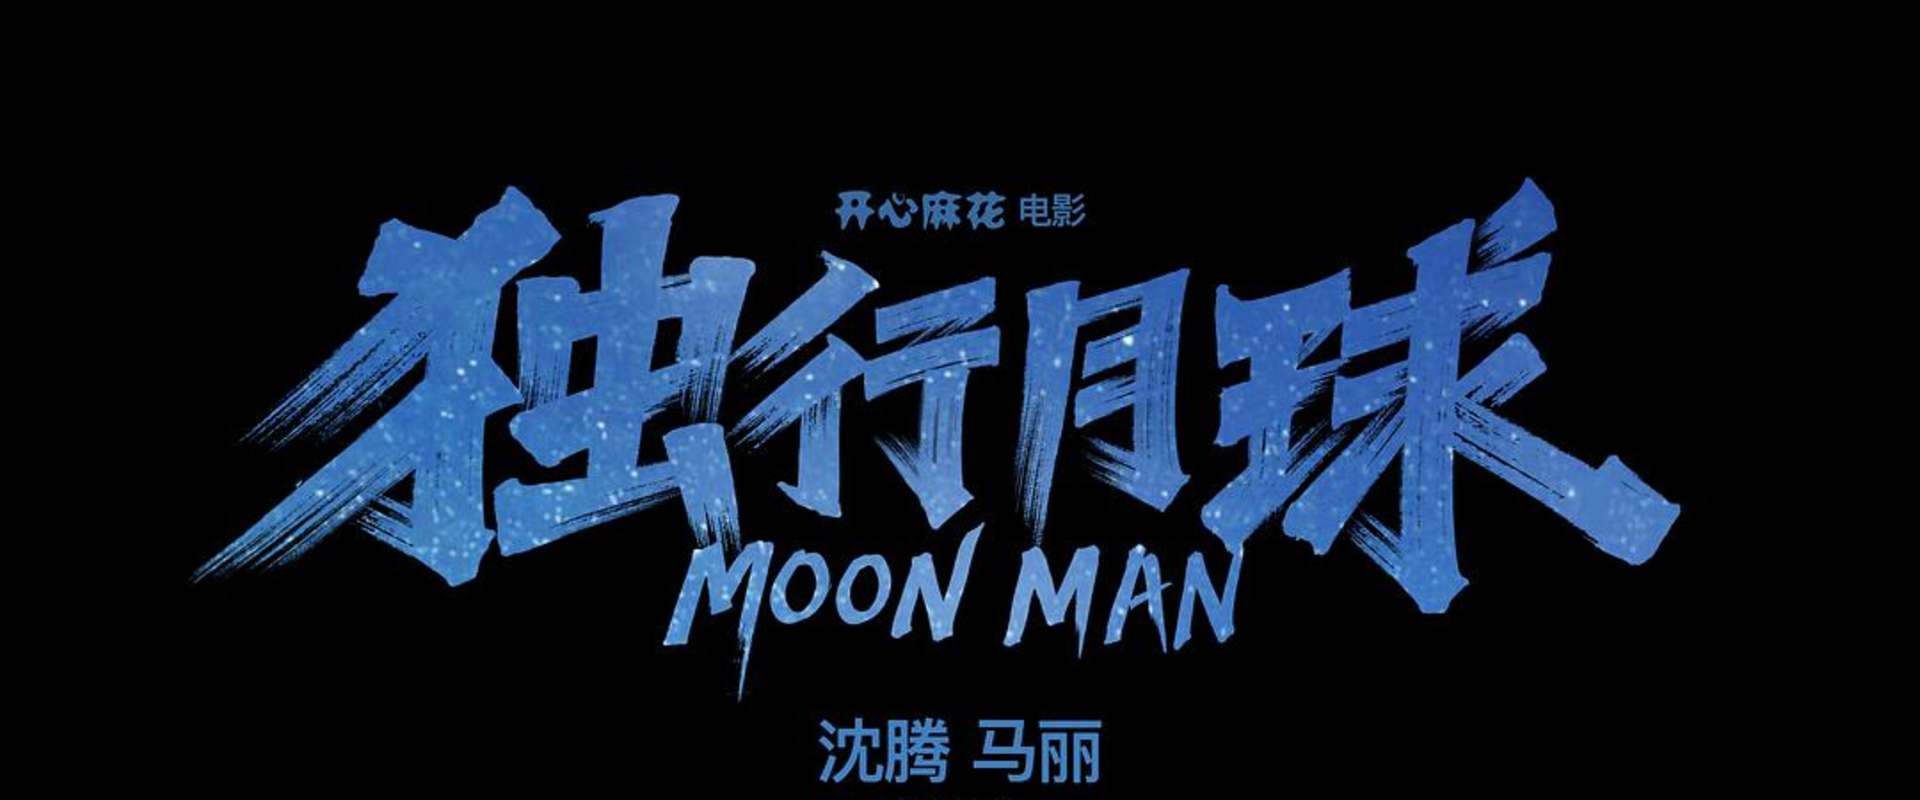 Moon Man background 2